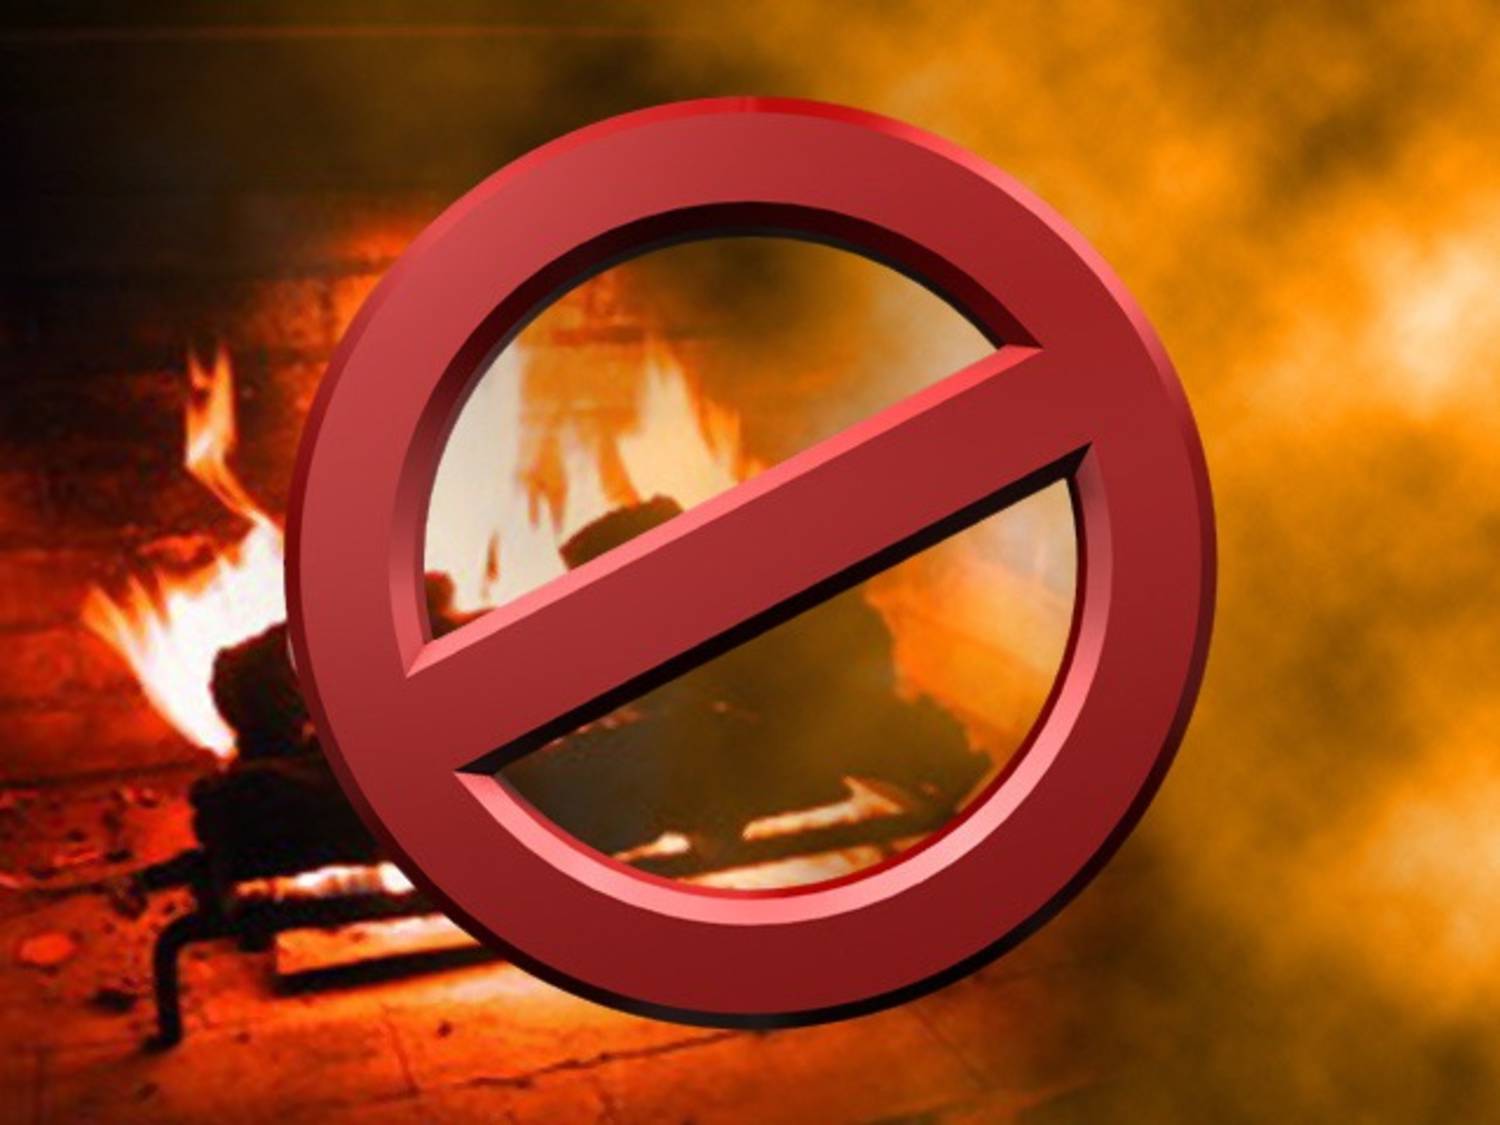 Burn Ban Information